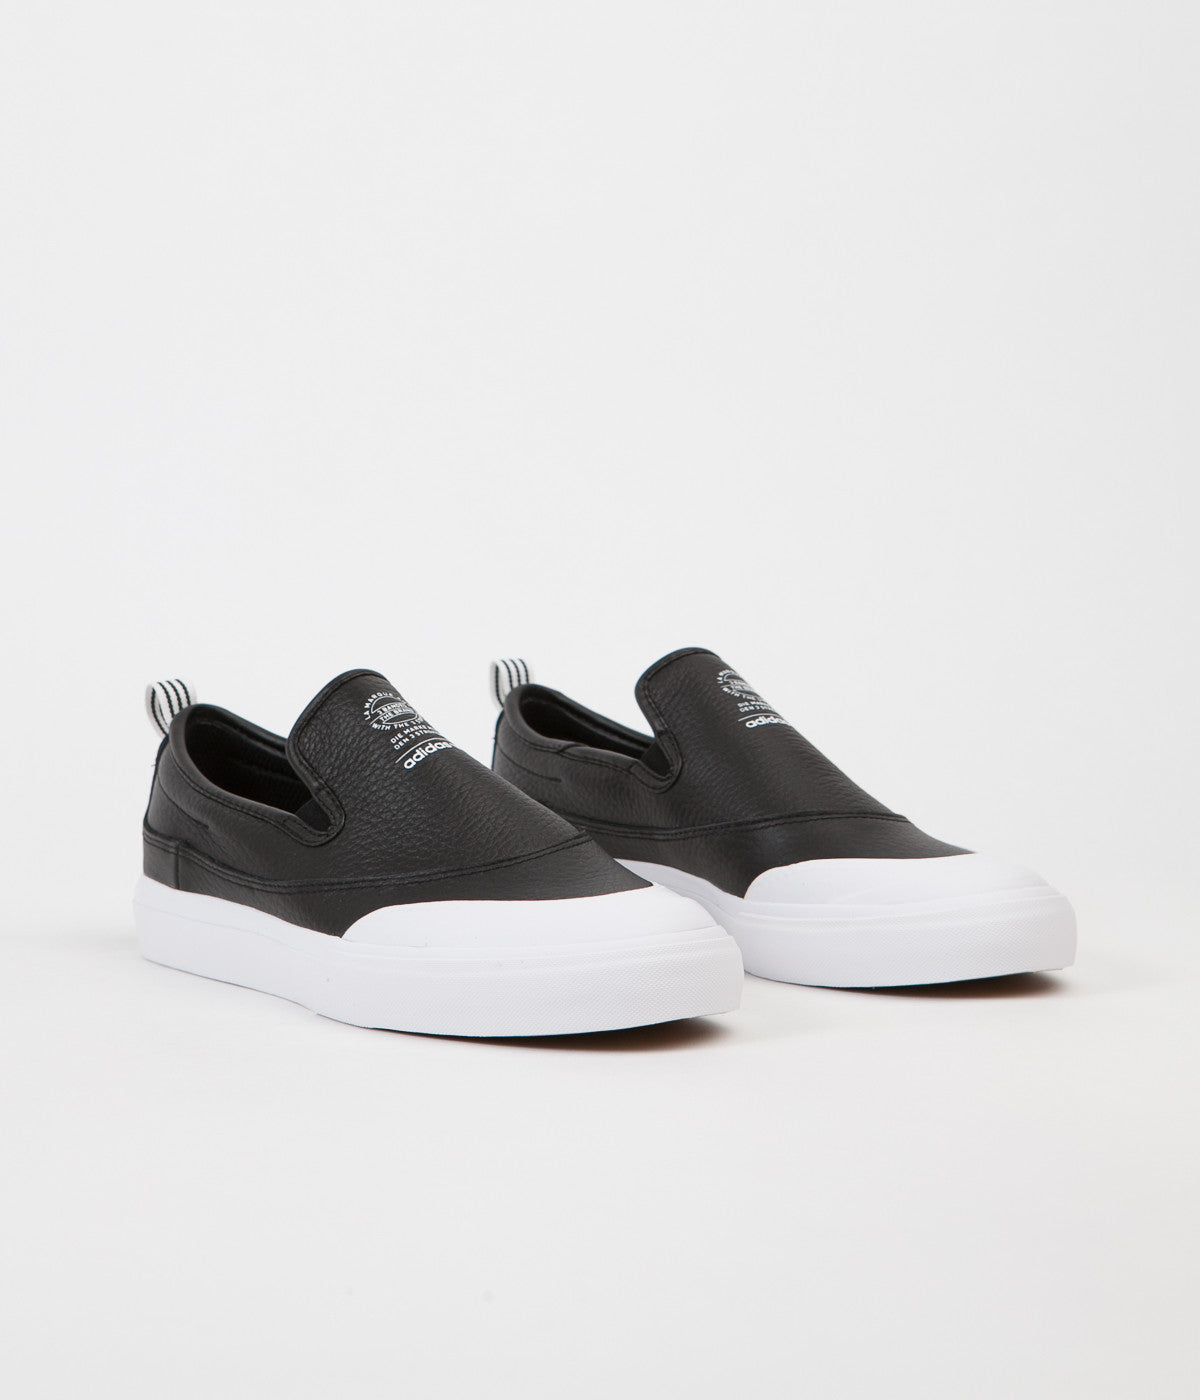 Adidas Matchcourt Slip On Shoes - Core Black / Core Black / White ...